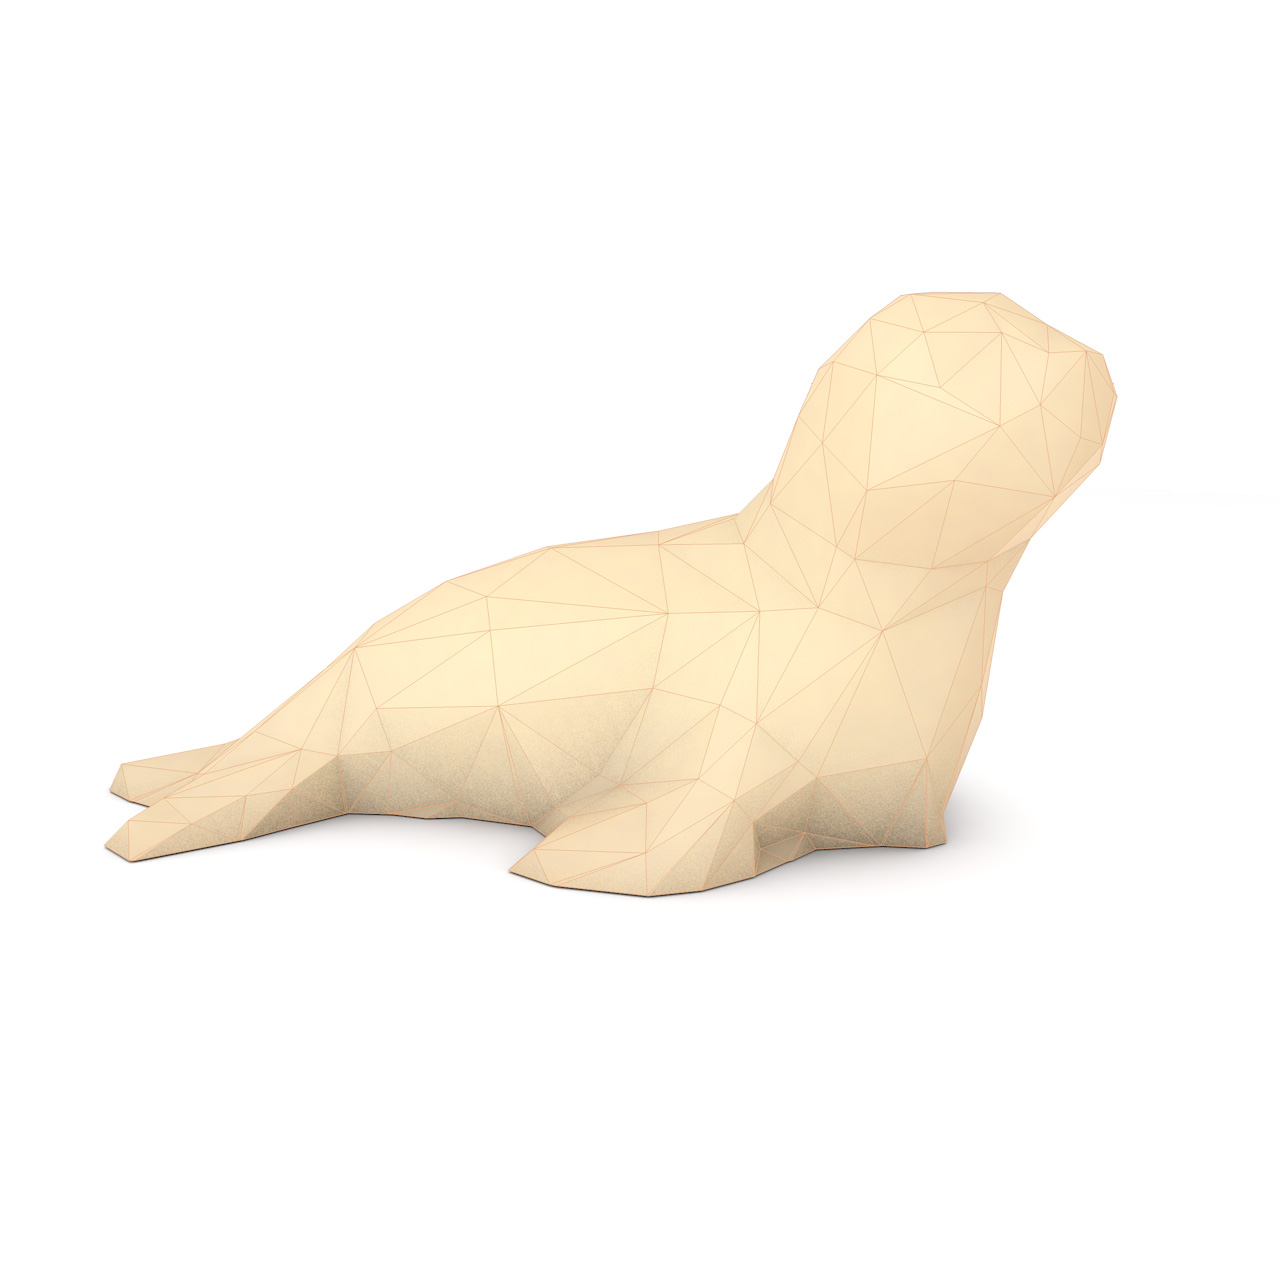 Laag poly seal 3D-printmodel